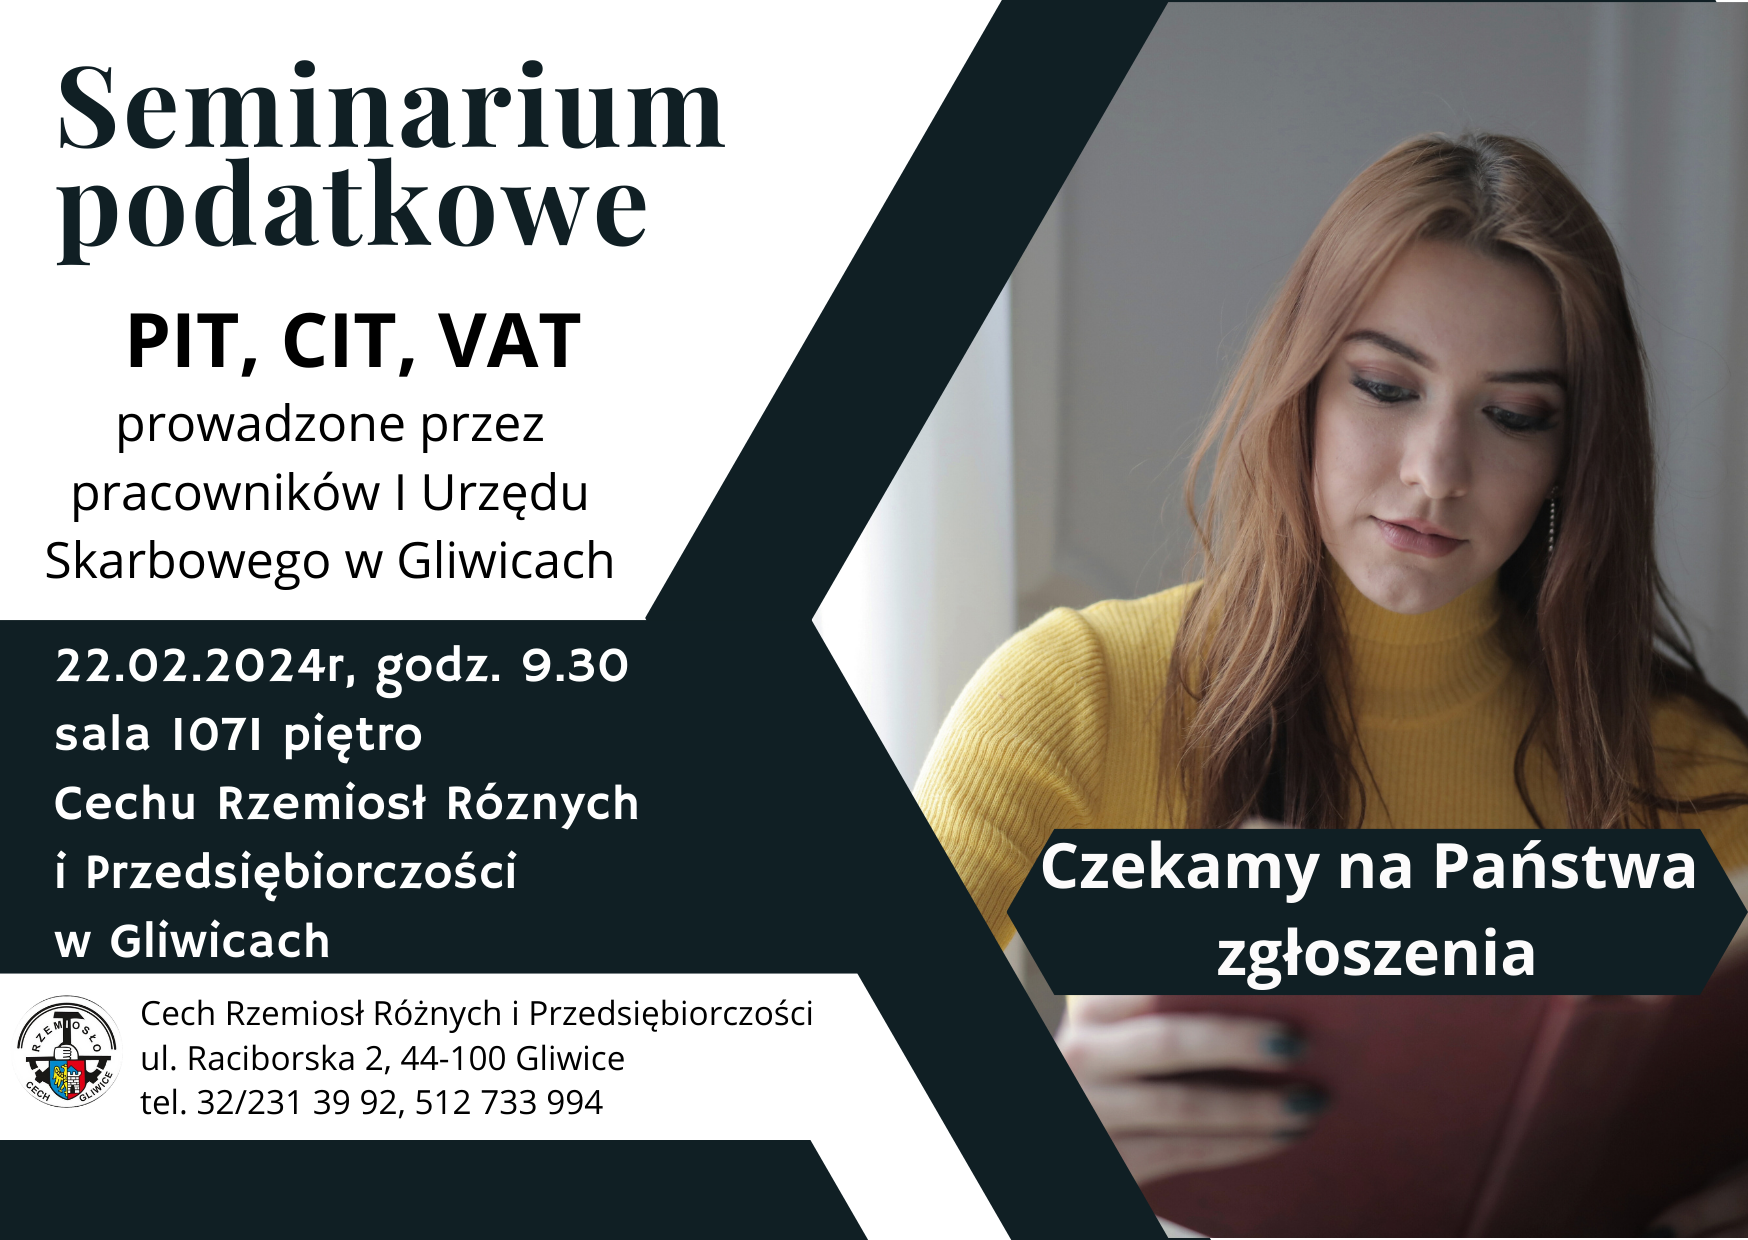 Seminarium podatkowe PI, CIT, VAT - 22.02.2024r.